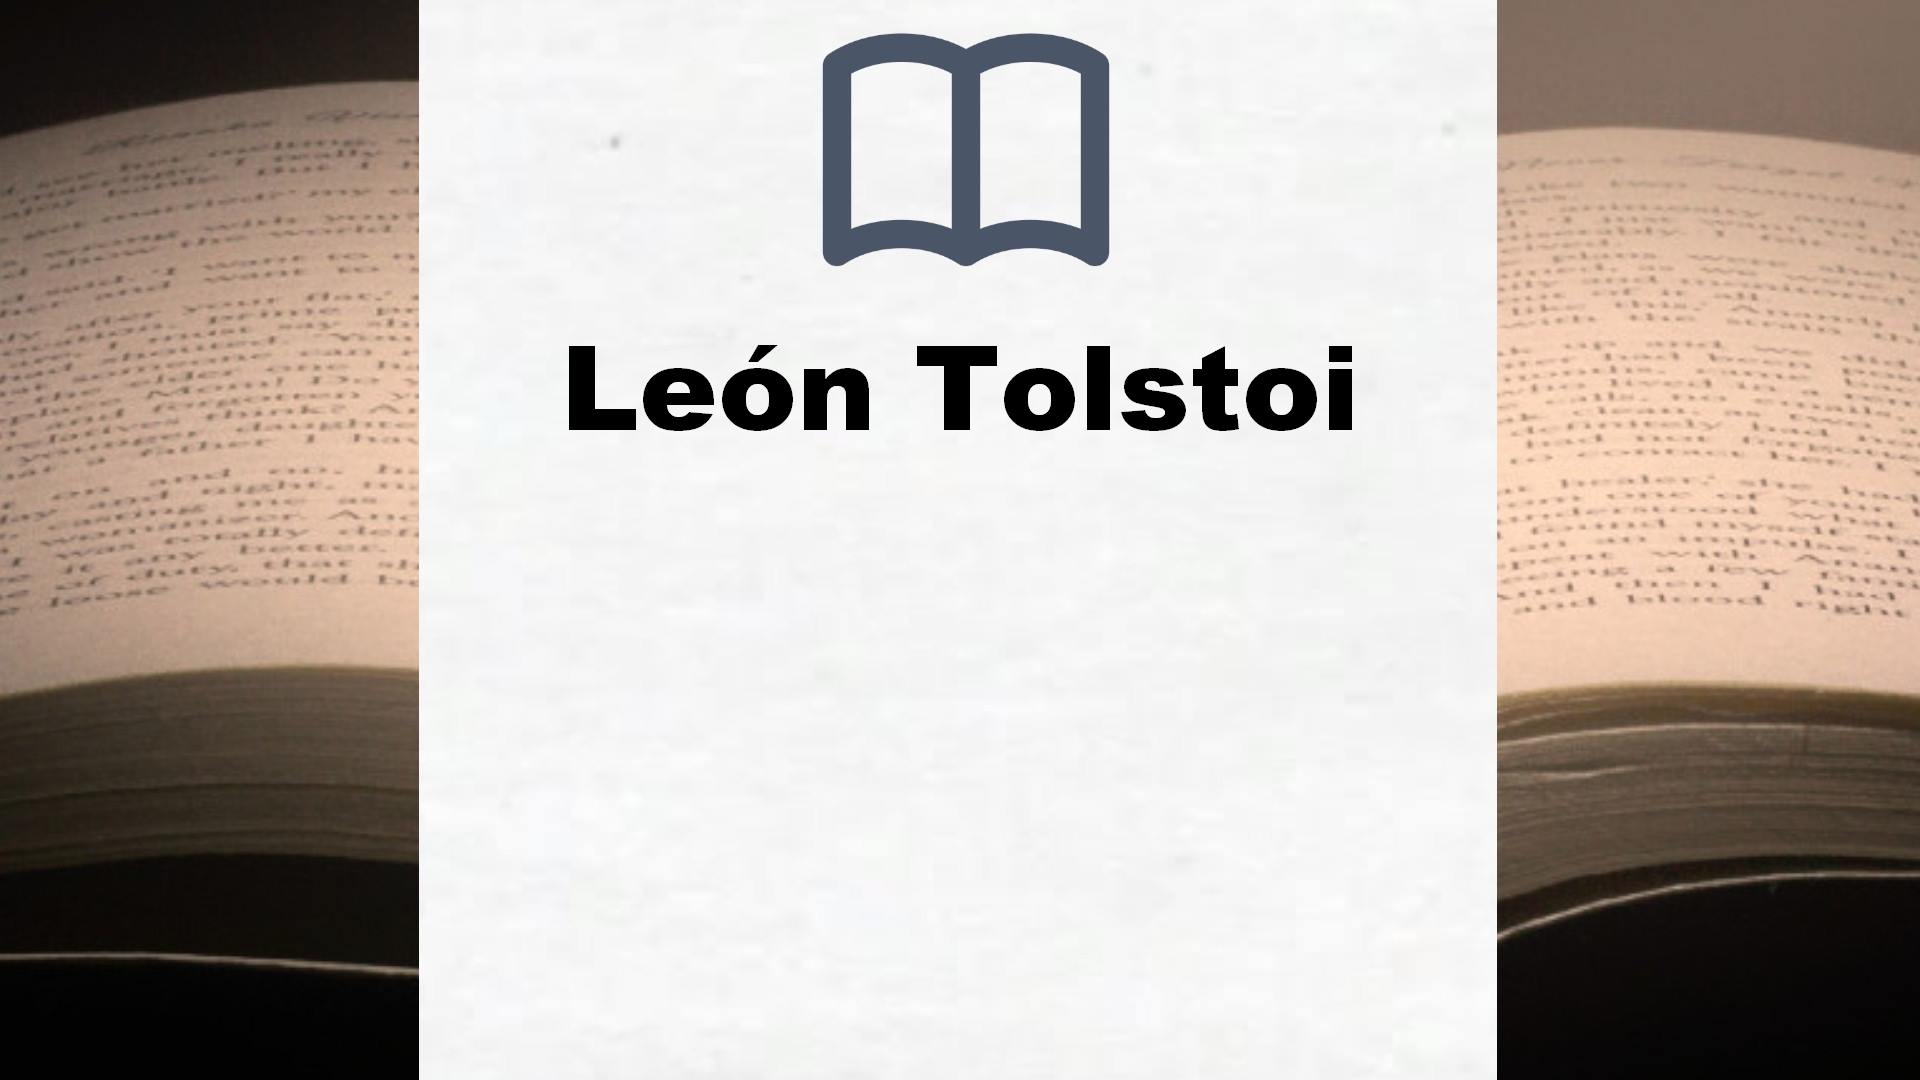 Libros León Tolstoi